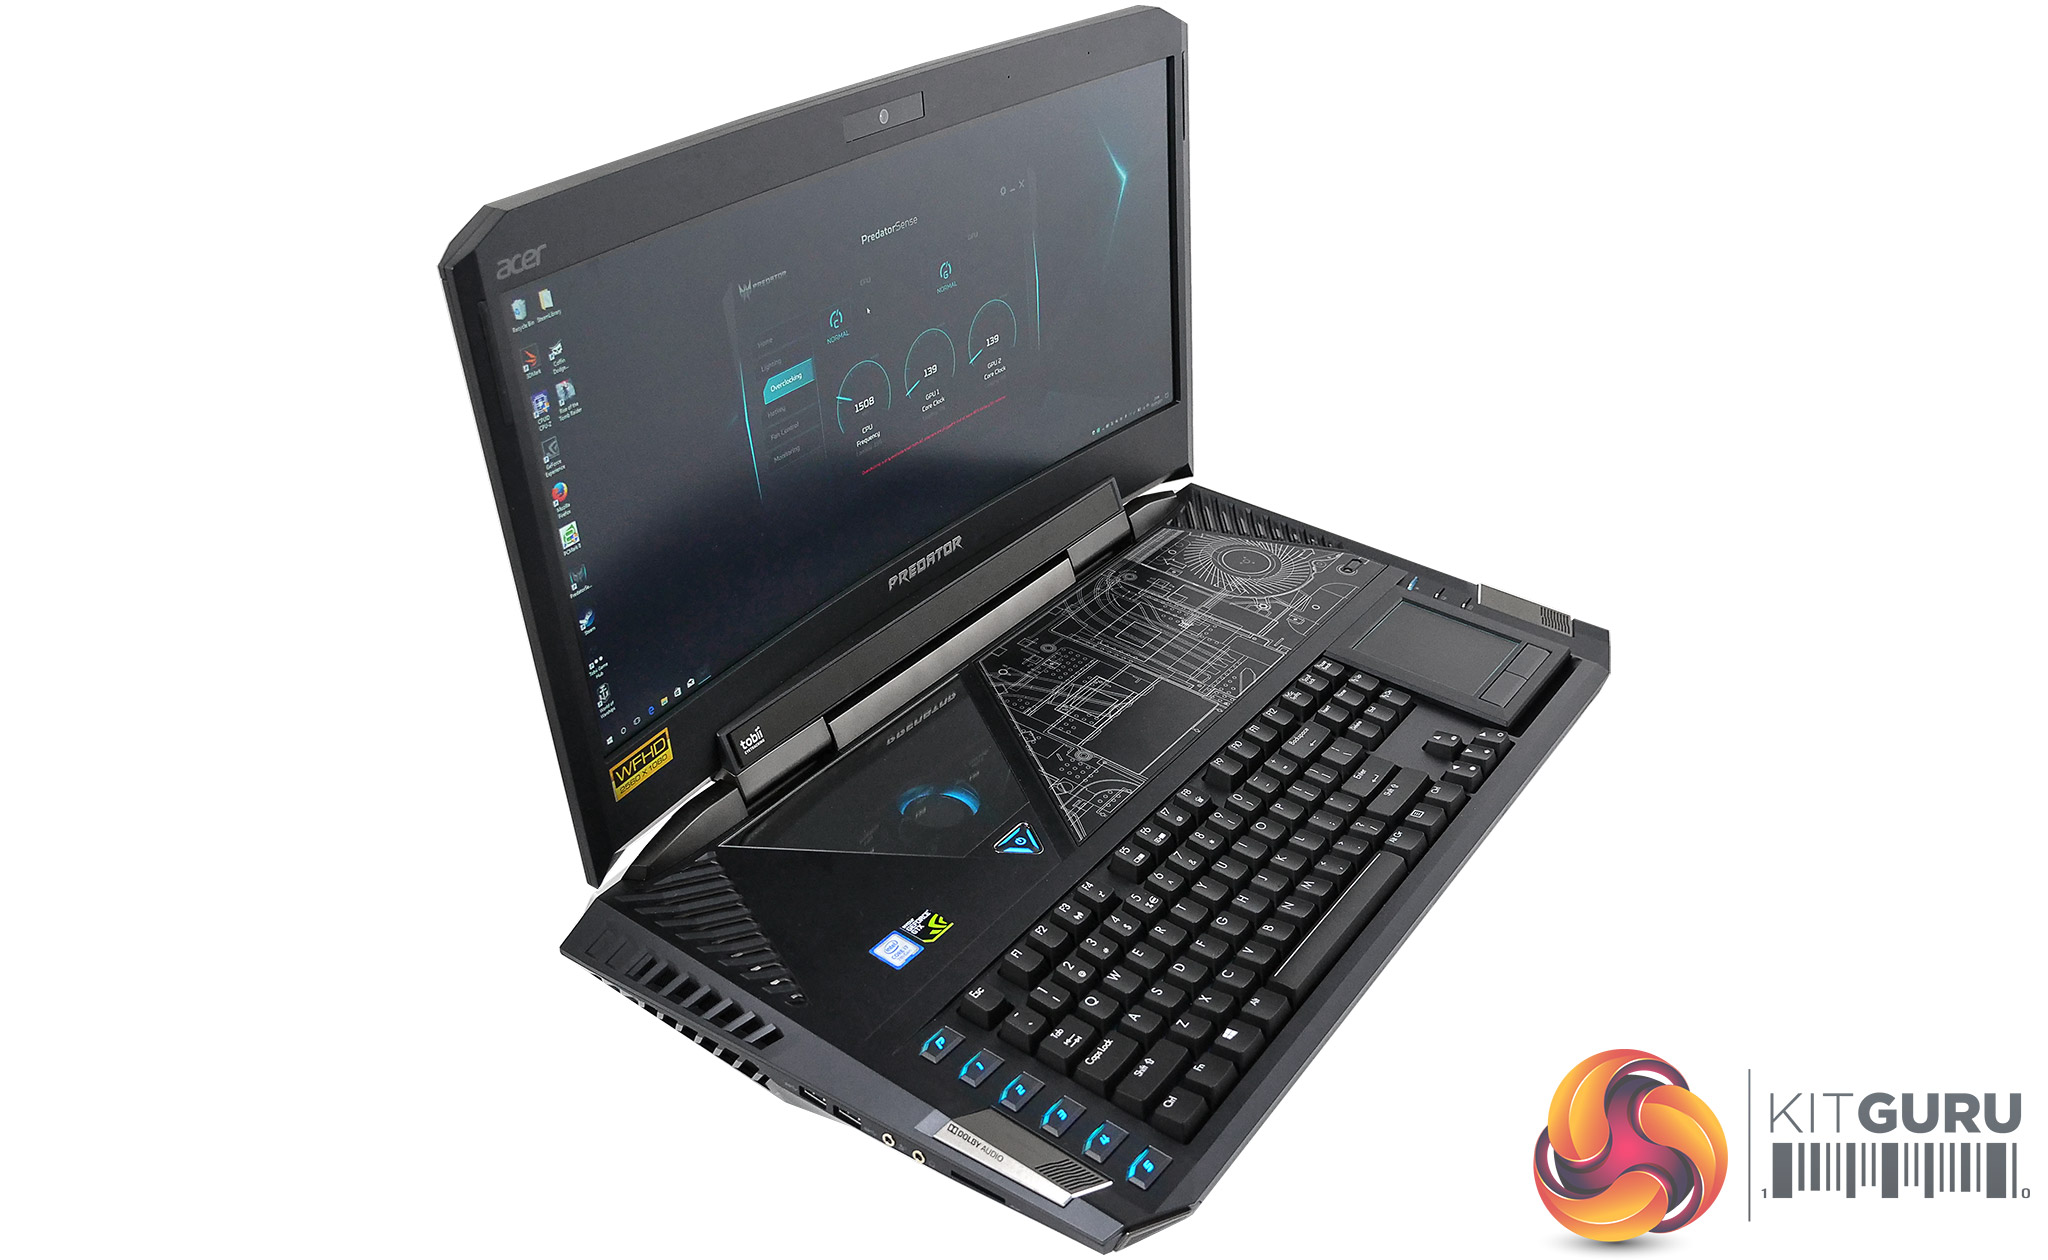 Acer Predator 21 X Laptop (21-inch curved IPS screen, 120Hz, GTX 1080 SLI)